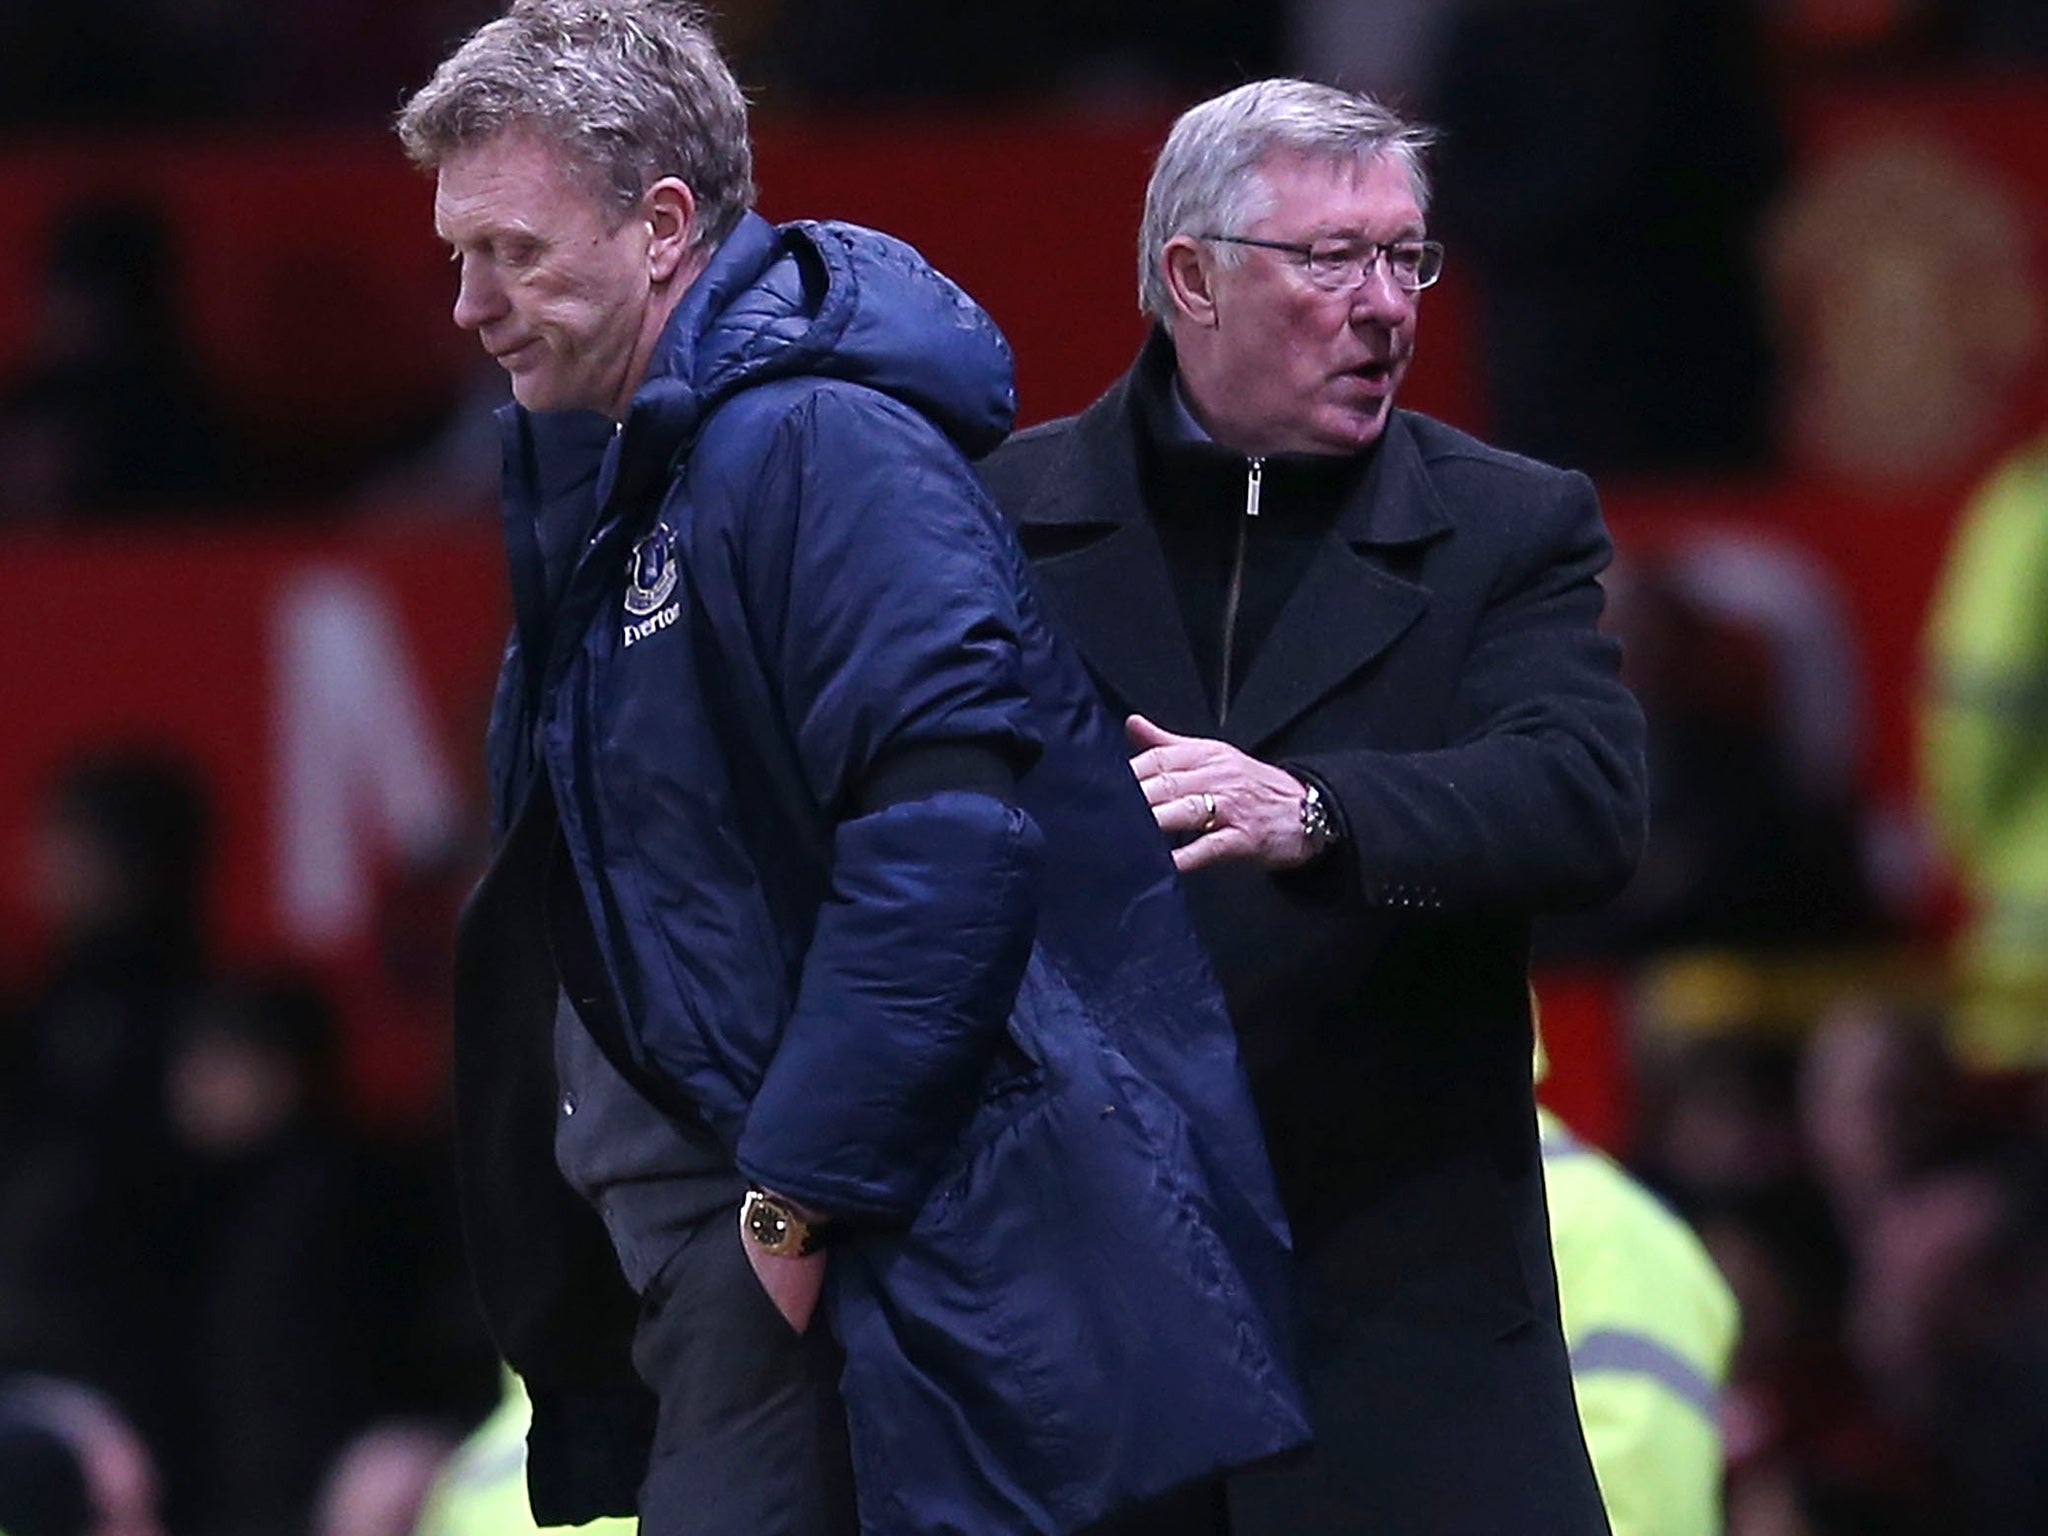 David Moyes and Sir Alex Ferguson back in February 2013